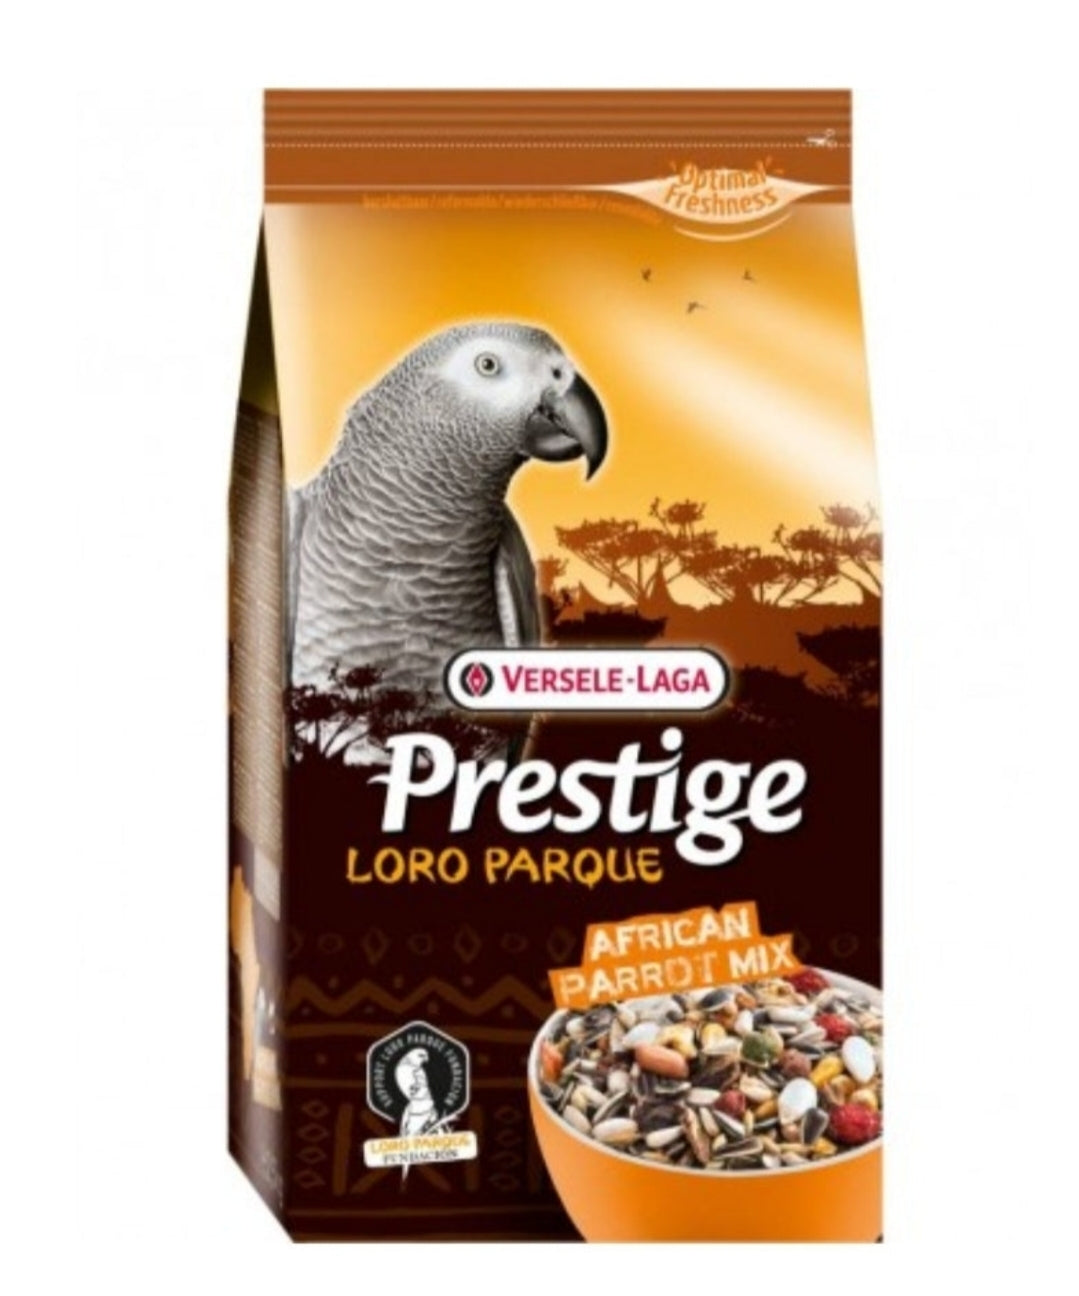 Prestige Loro Parque - African Parrot Mix 15kg - Versele Laga